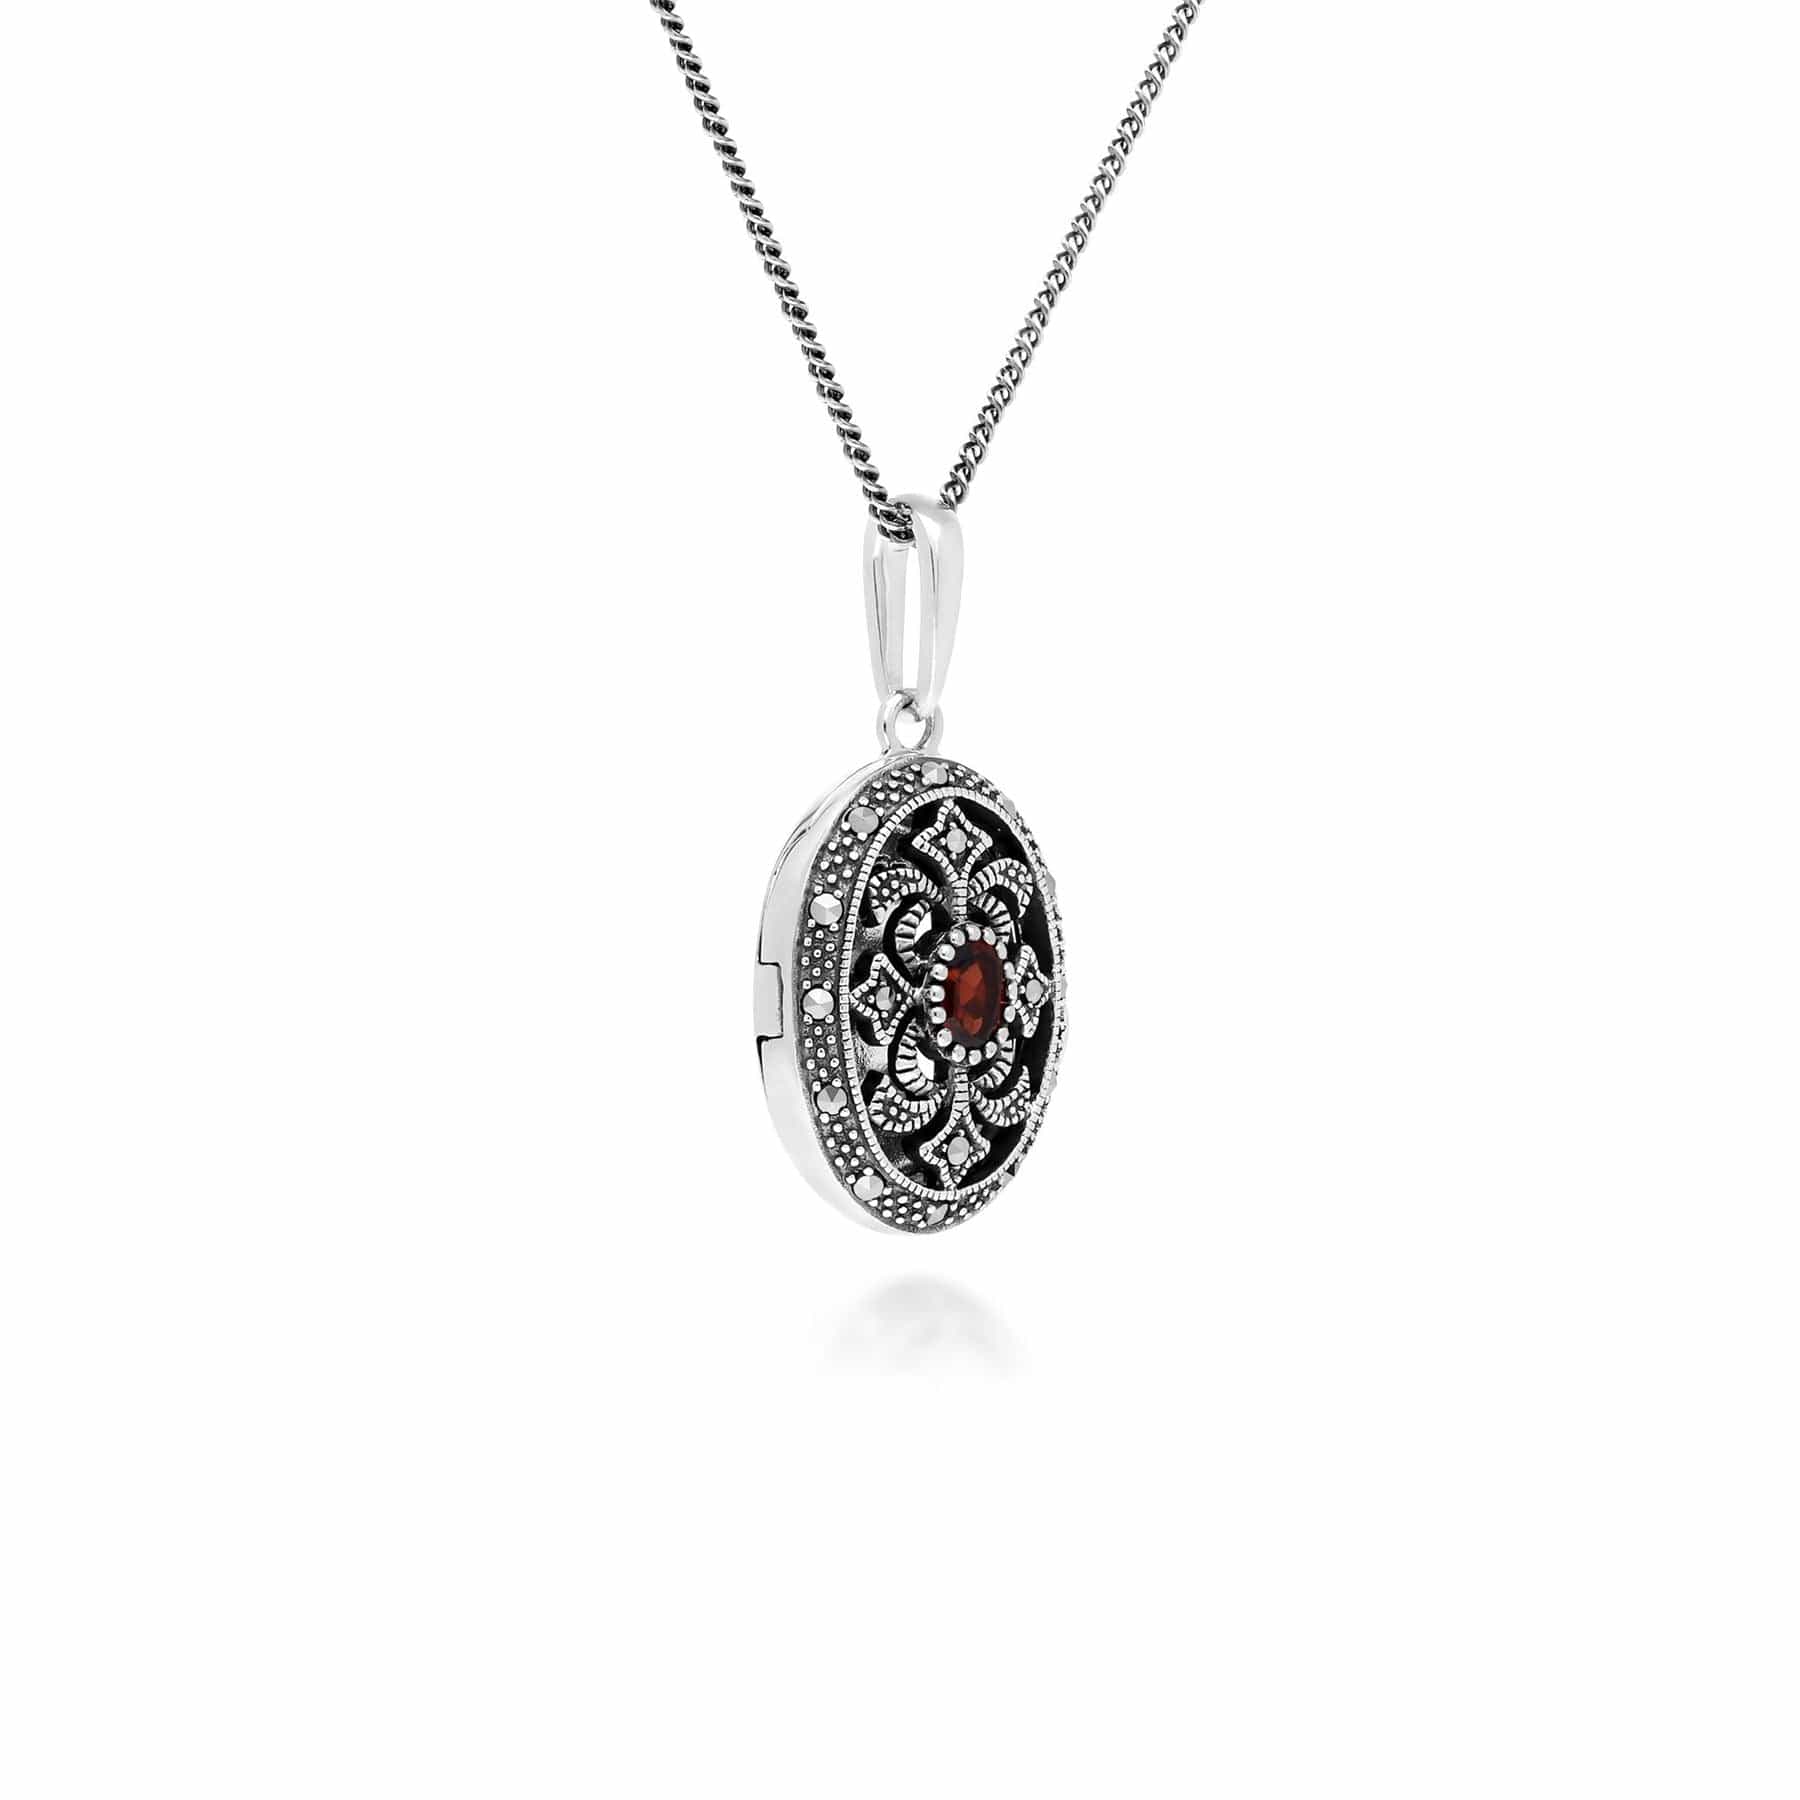 214N716204925 Art Nouveau Style Oval Garnet & Marcasite Locket Necklace in Sterling Silver 2